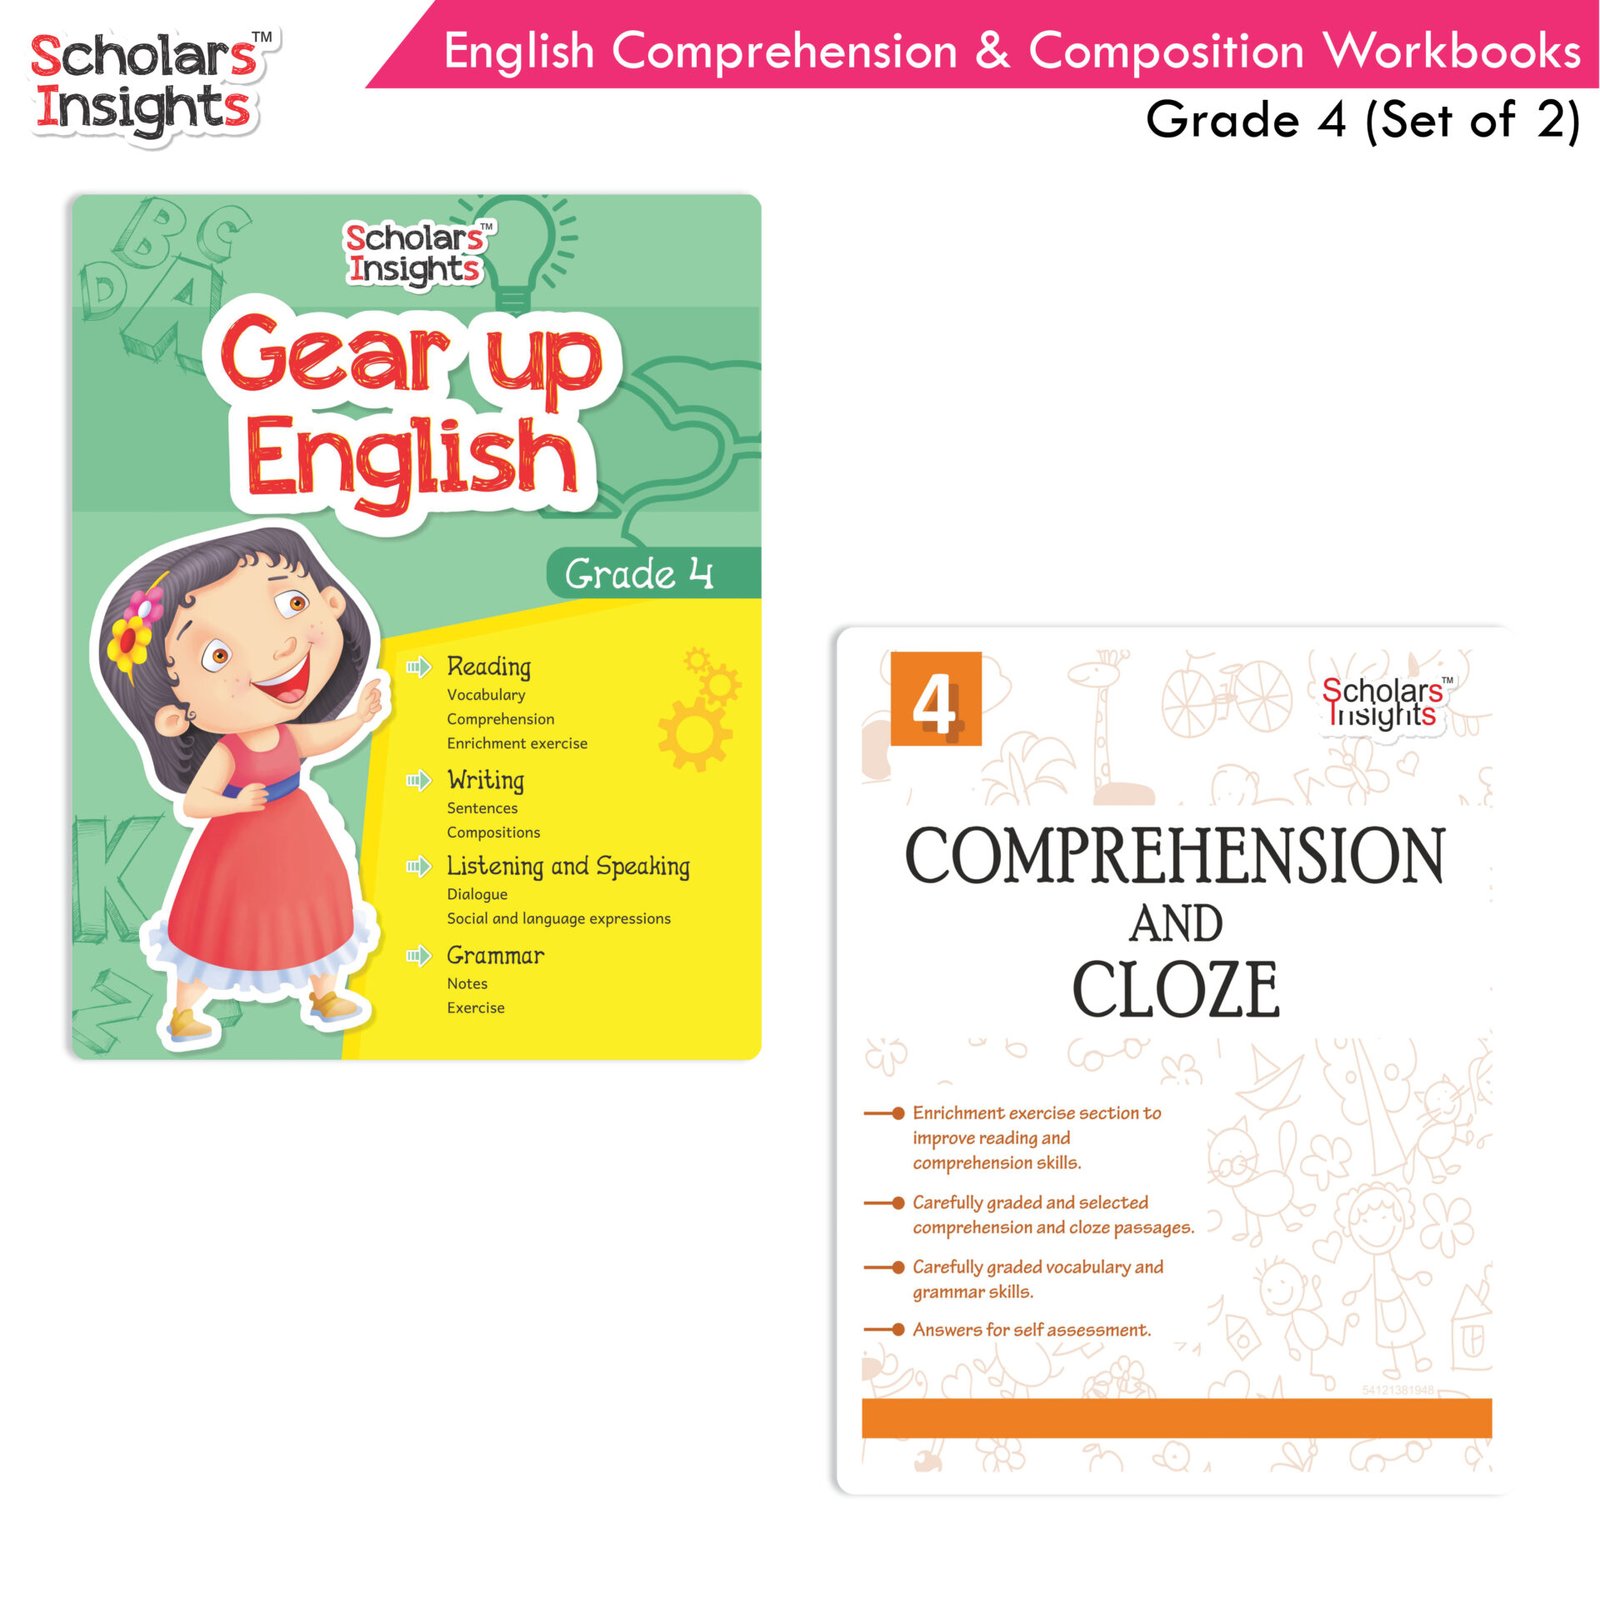 Scholars Insights English Comprehension Composition Workbook Grade 4 1